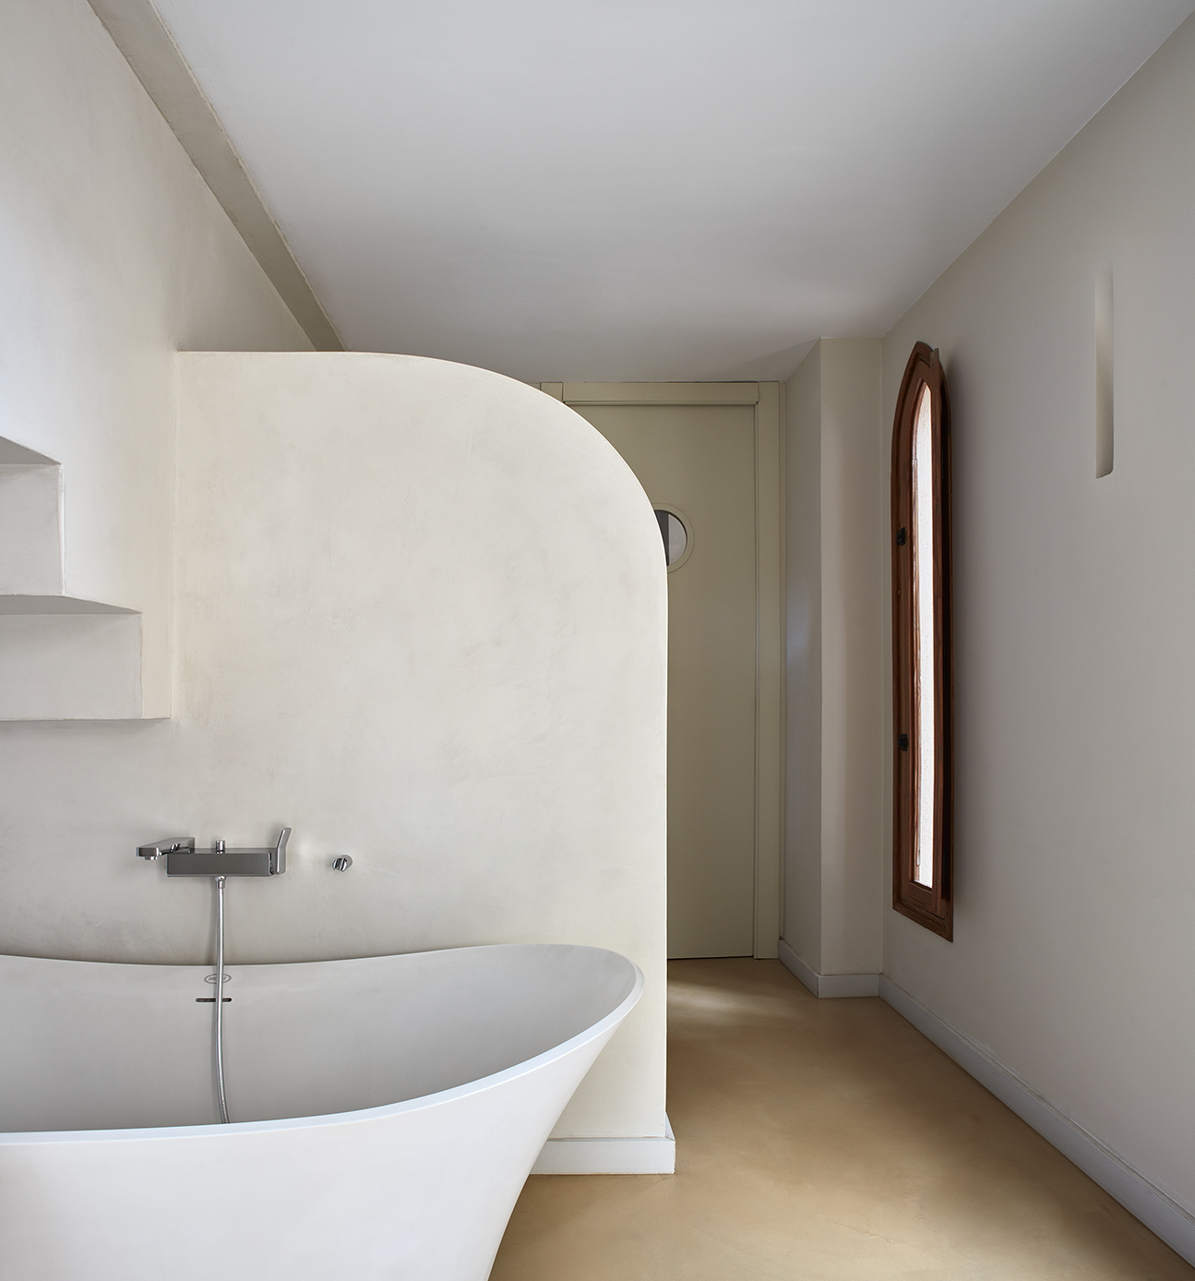 Microcement bathroom on walls and floor Casa Isabel